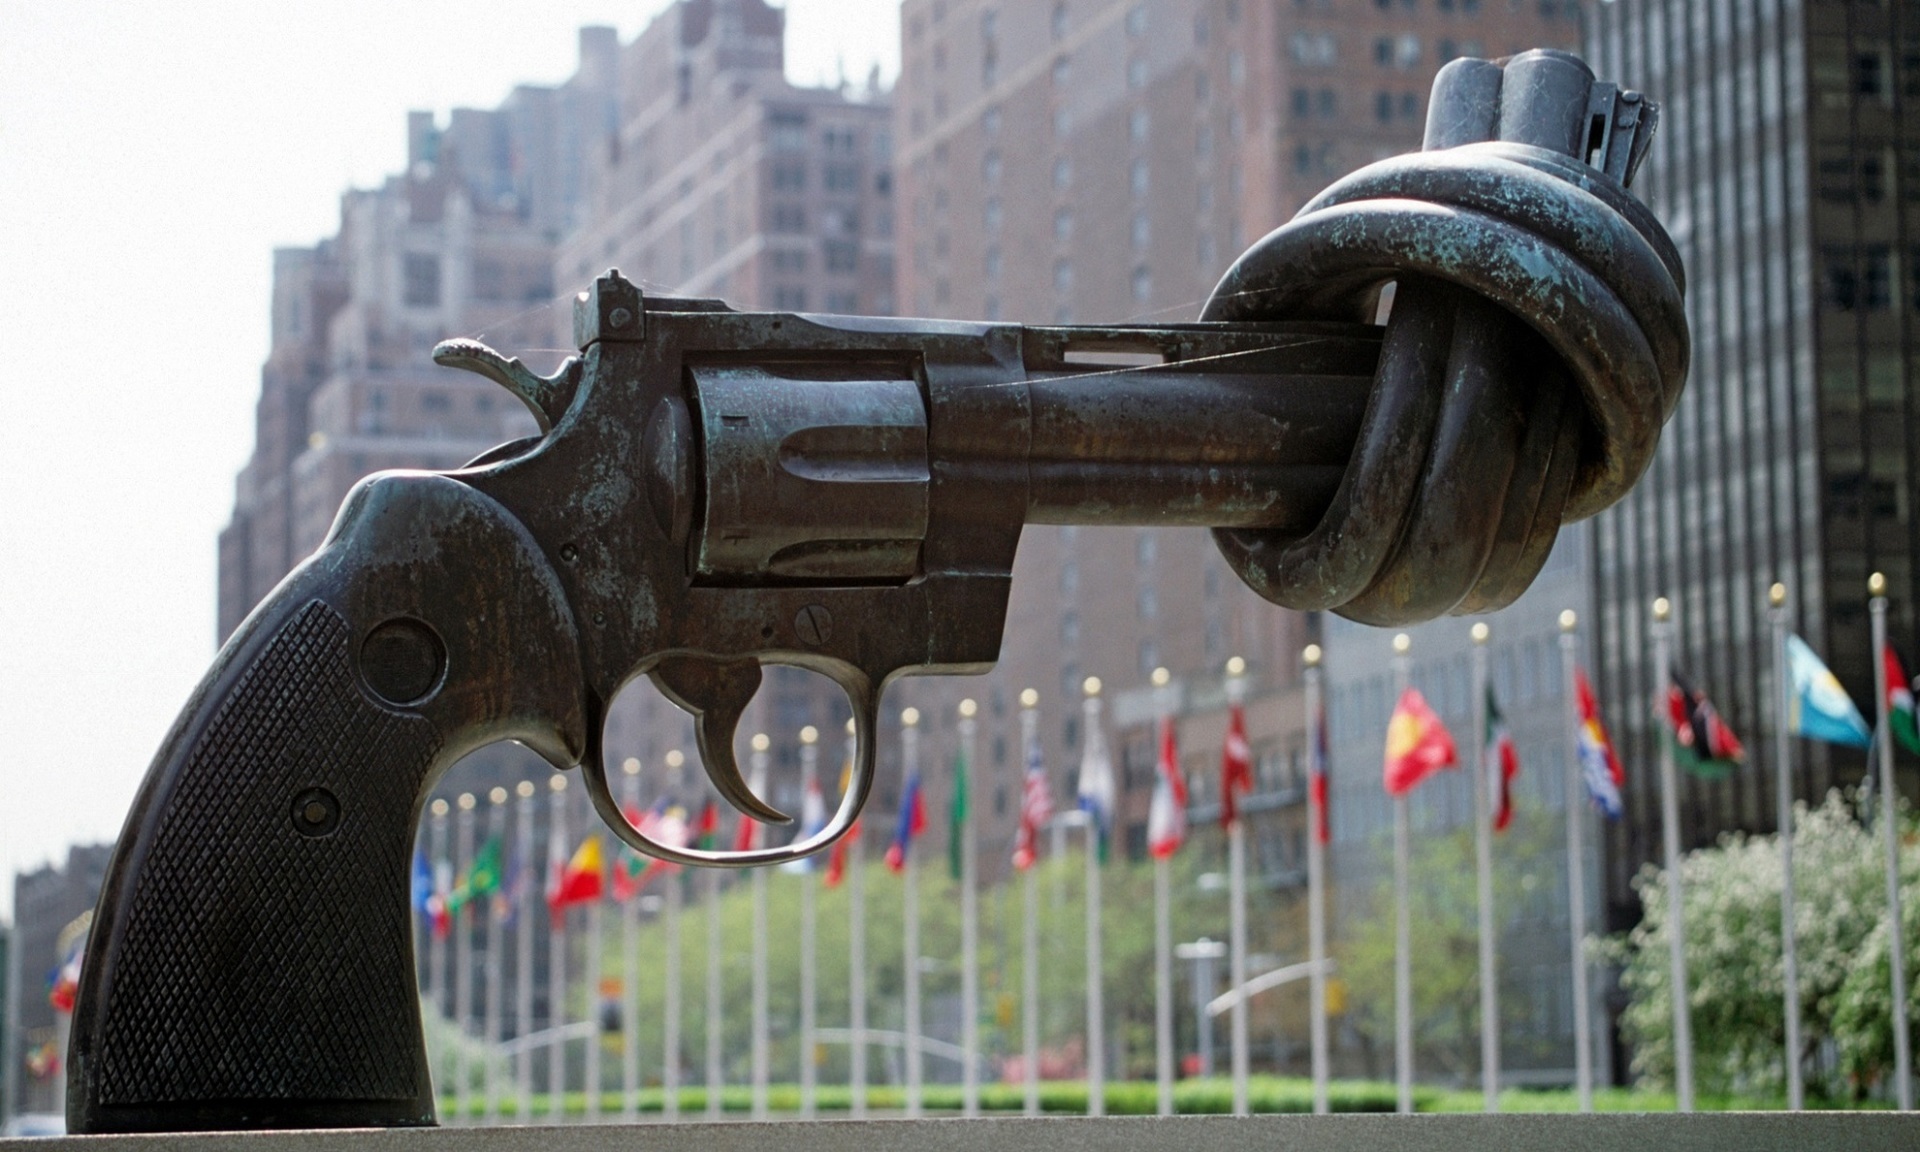 ООН против насилия на основе религии и убеждений